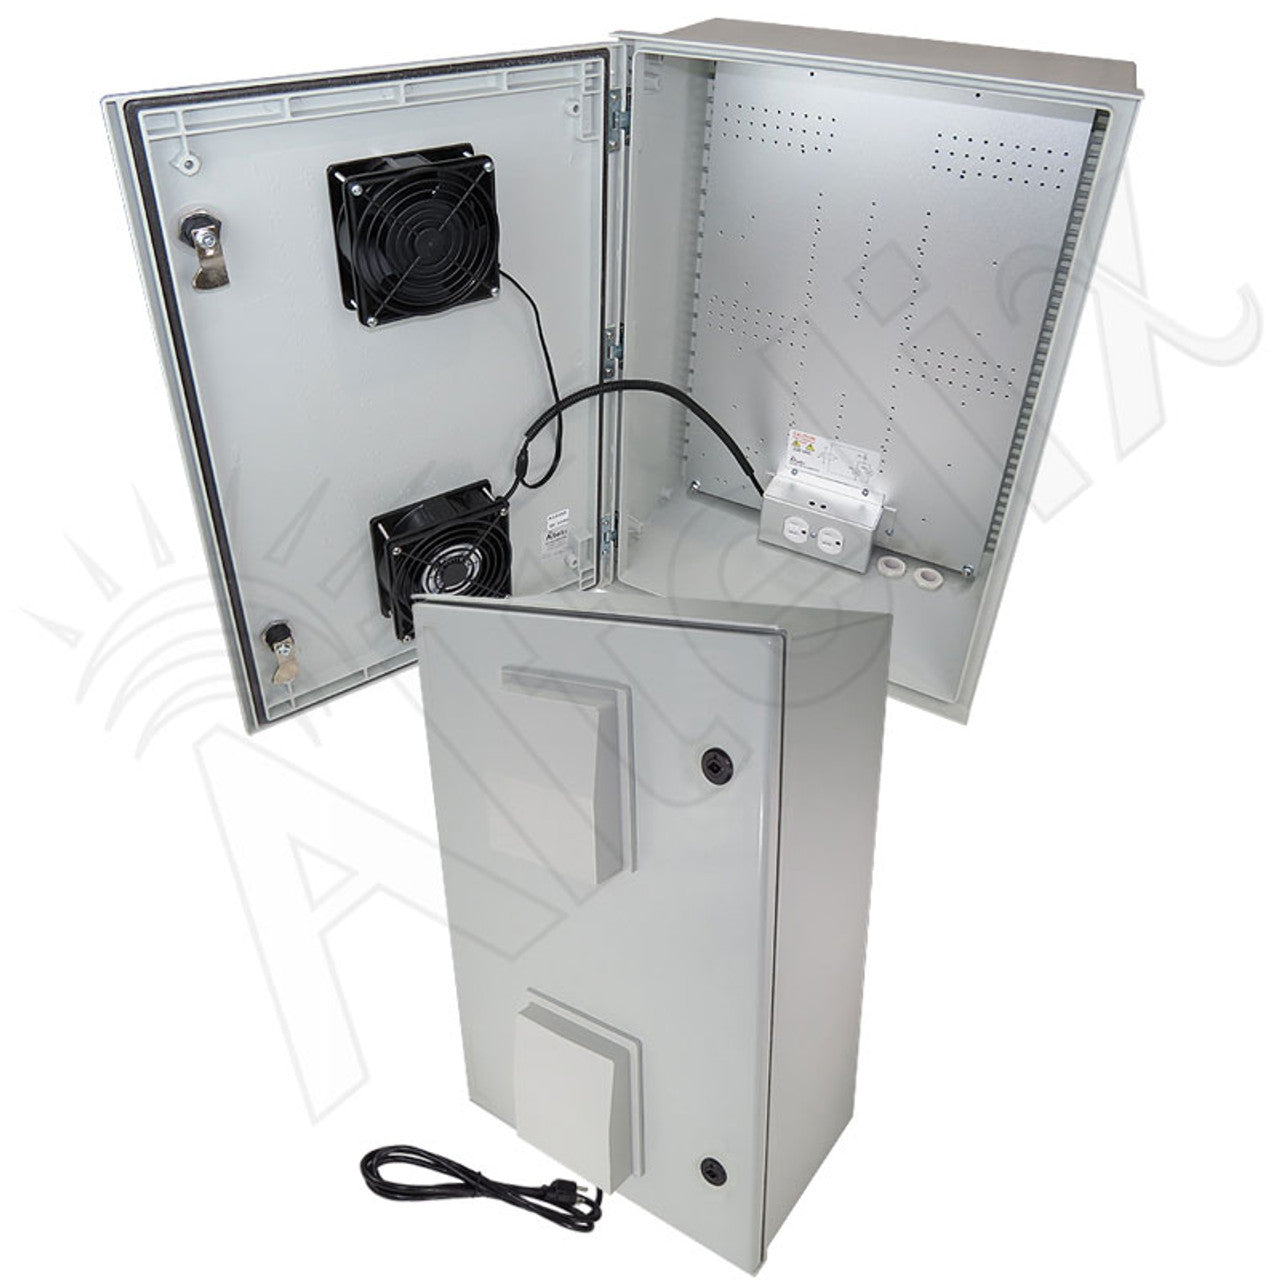 Altelix Vented Fiberglass Weatherproof NEMA Enclosure with Cooling Fan, 200W Heater, 120 VAC Outlets & Power Cord-5